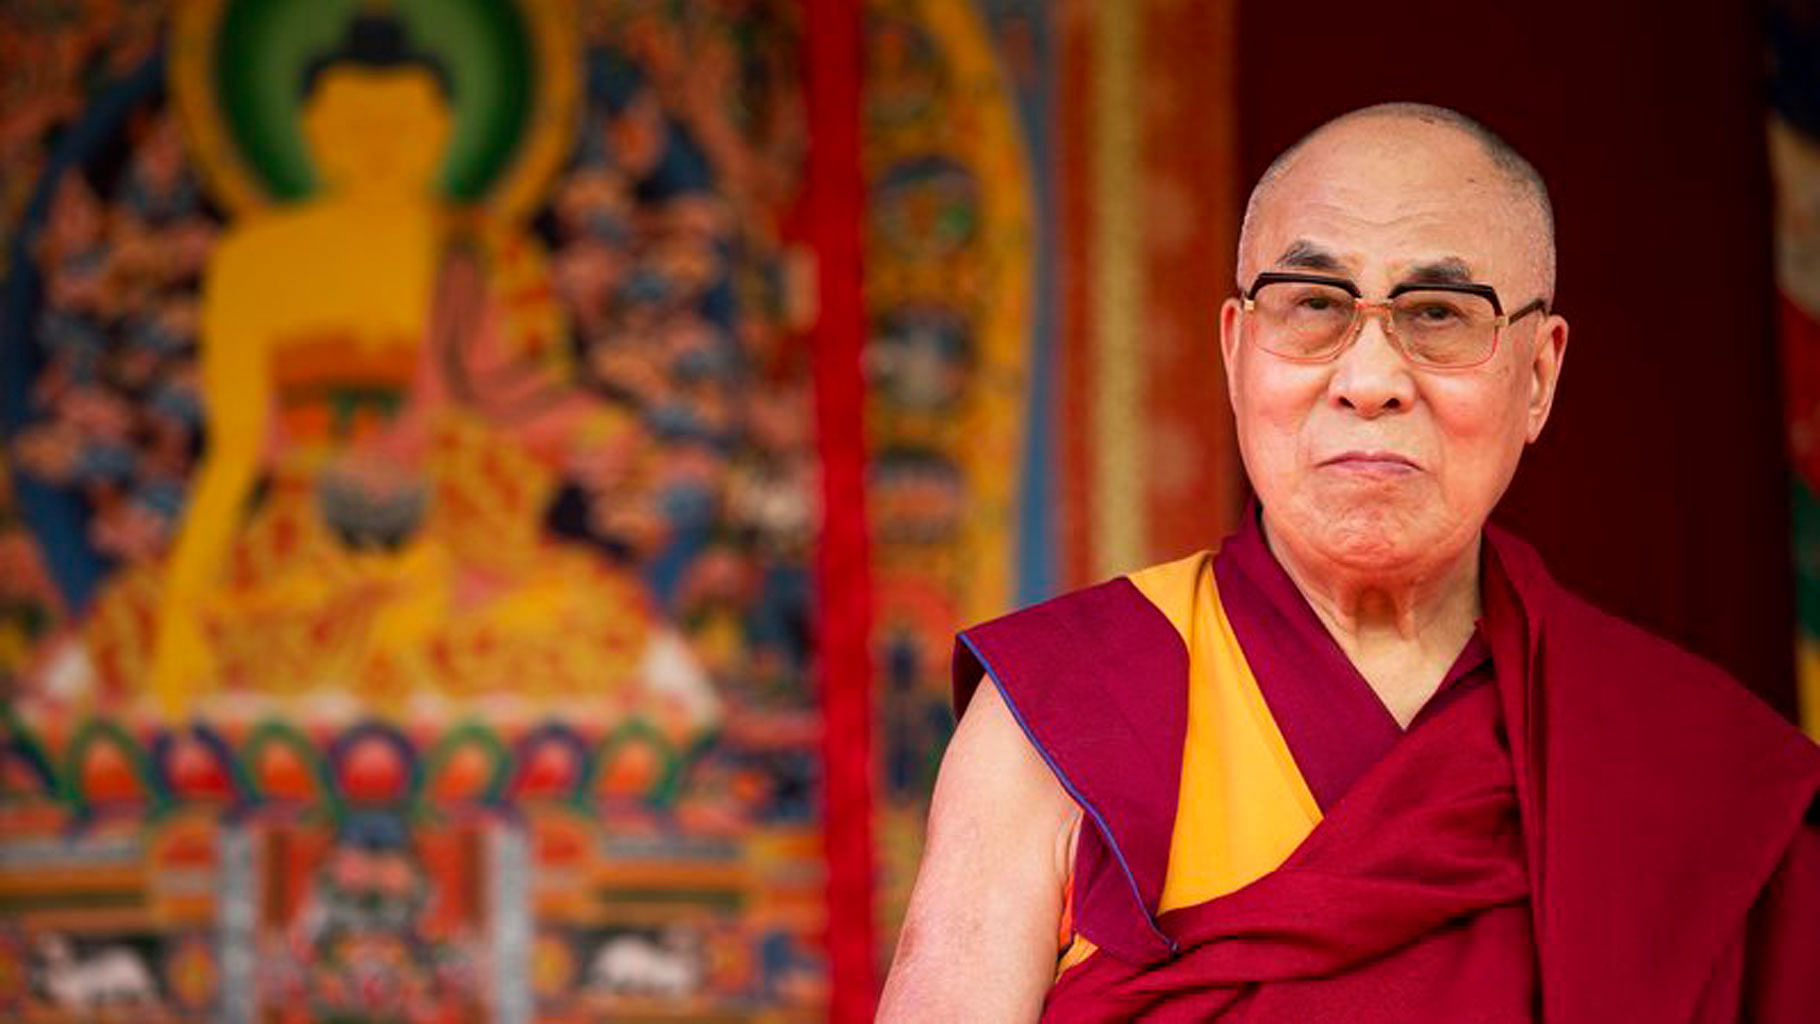 Tibetan spiritual leader in exile Dalai Lama on Sunday, 14 October praised India for its freedom.